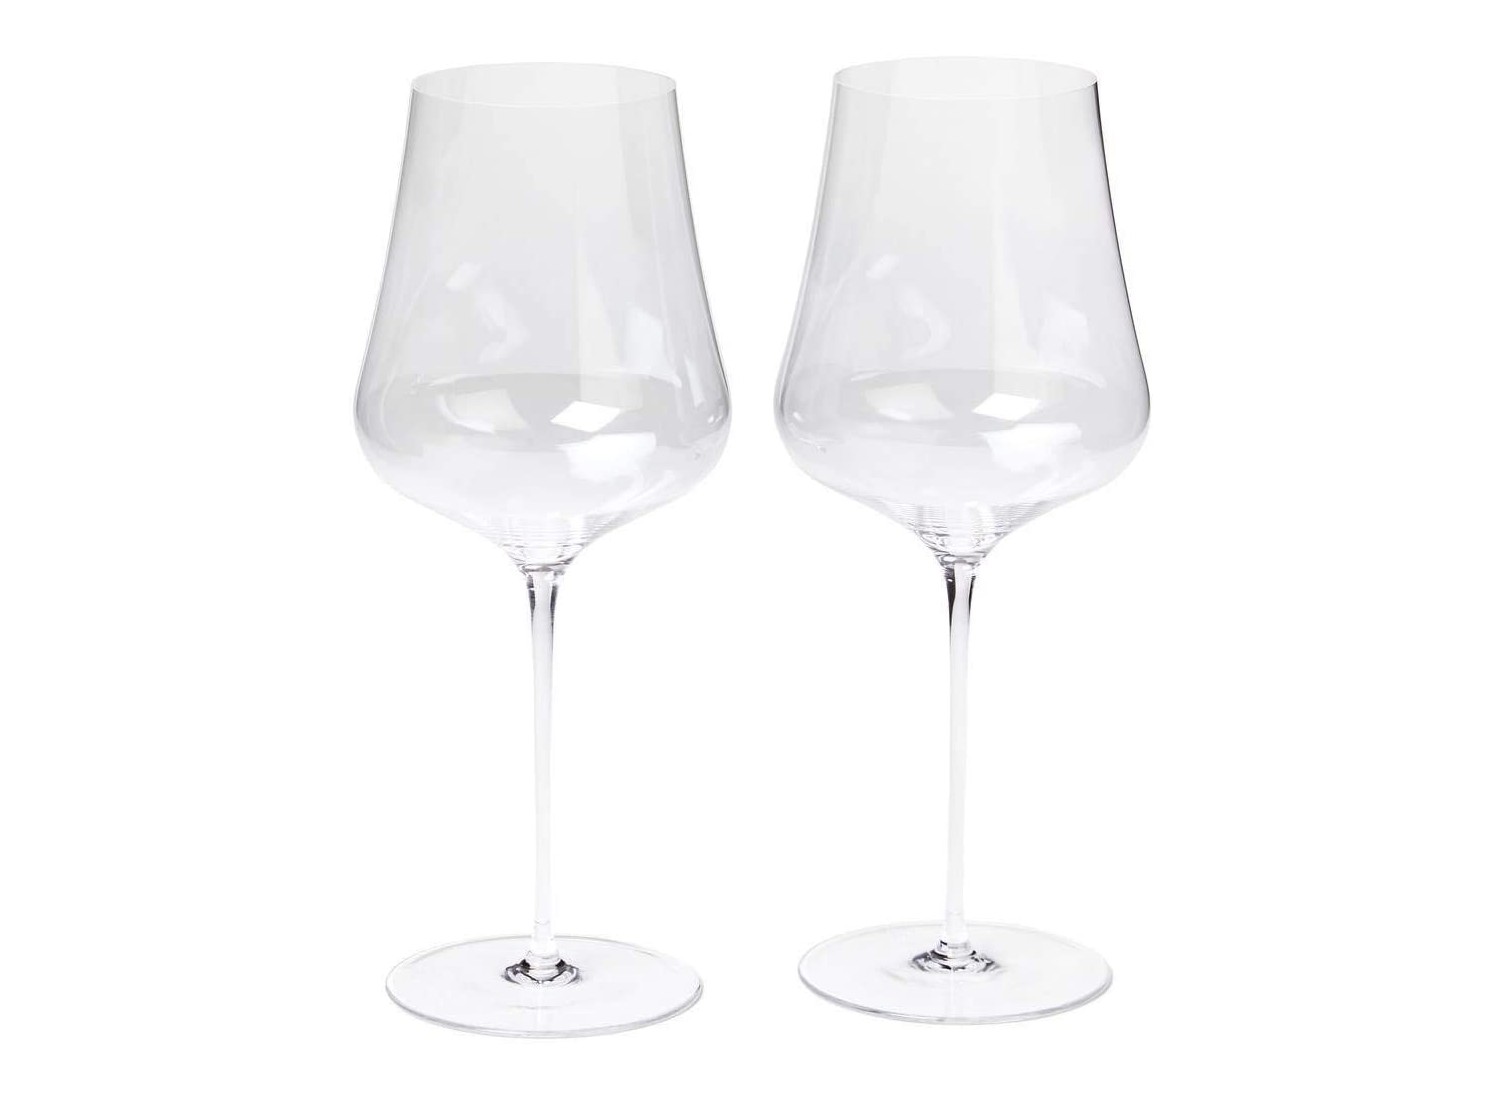 https://www.brit.co/reviews/wp-content/uploads/2023/04/gabriel-glas-crystal-wine-glasses-britco.jpg